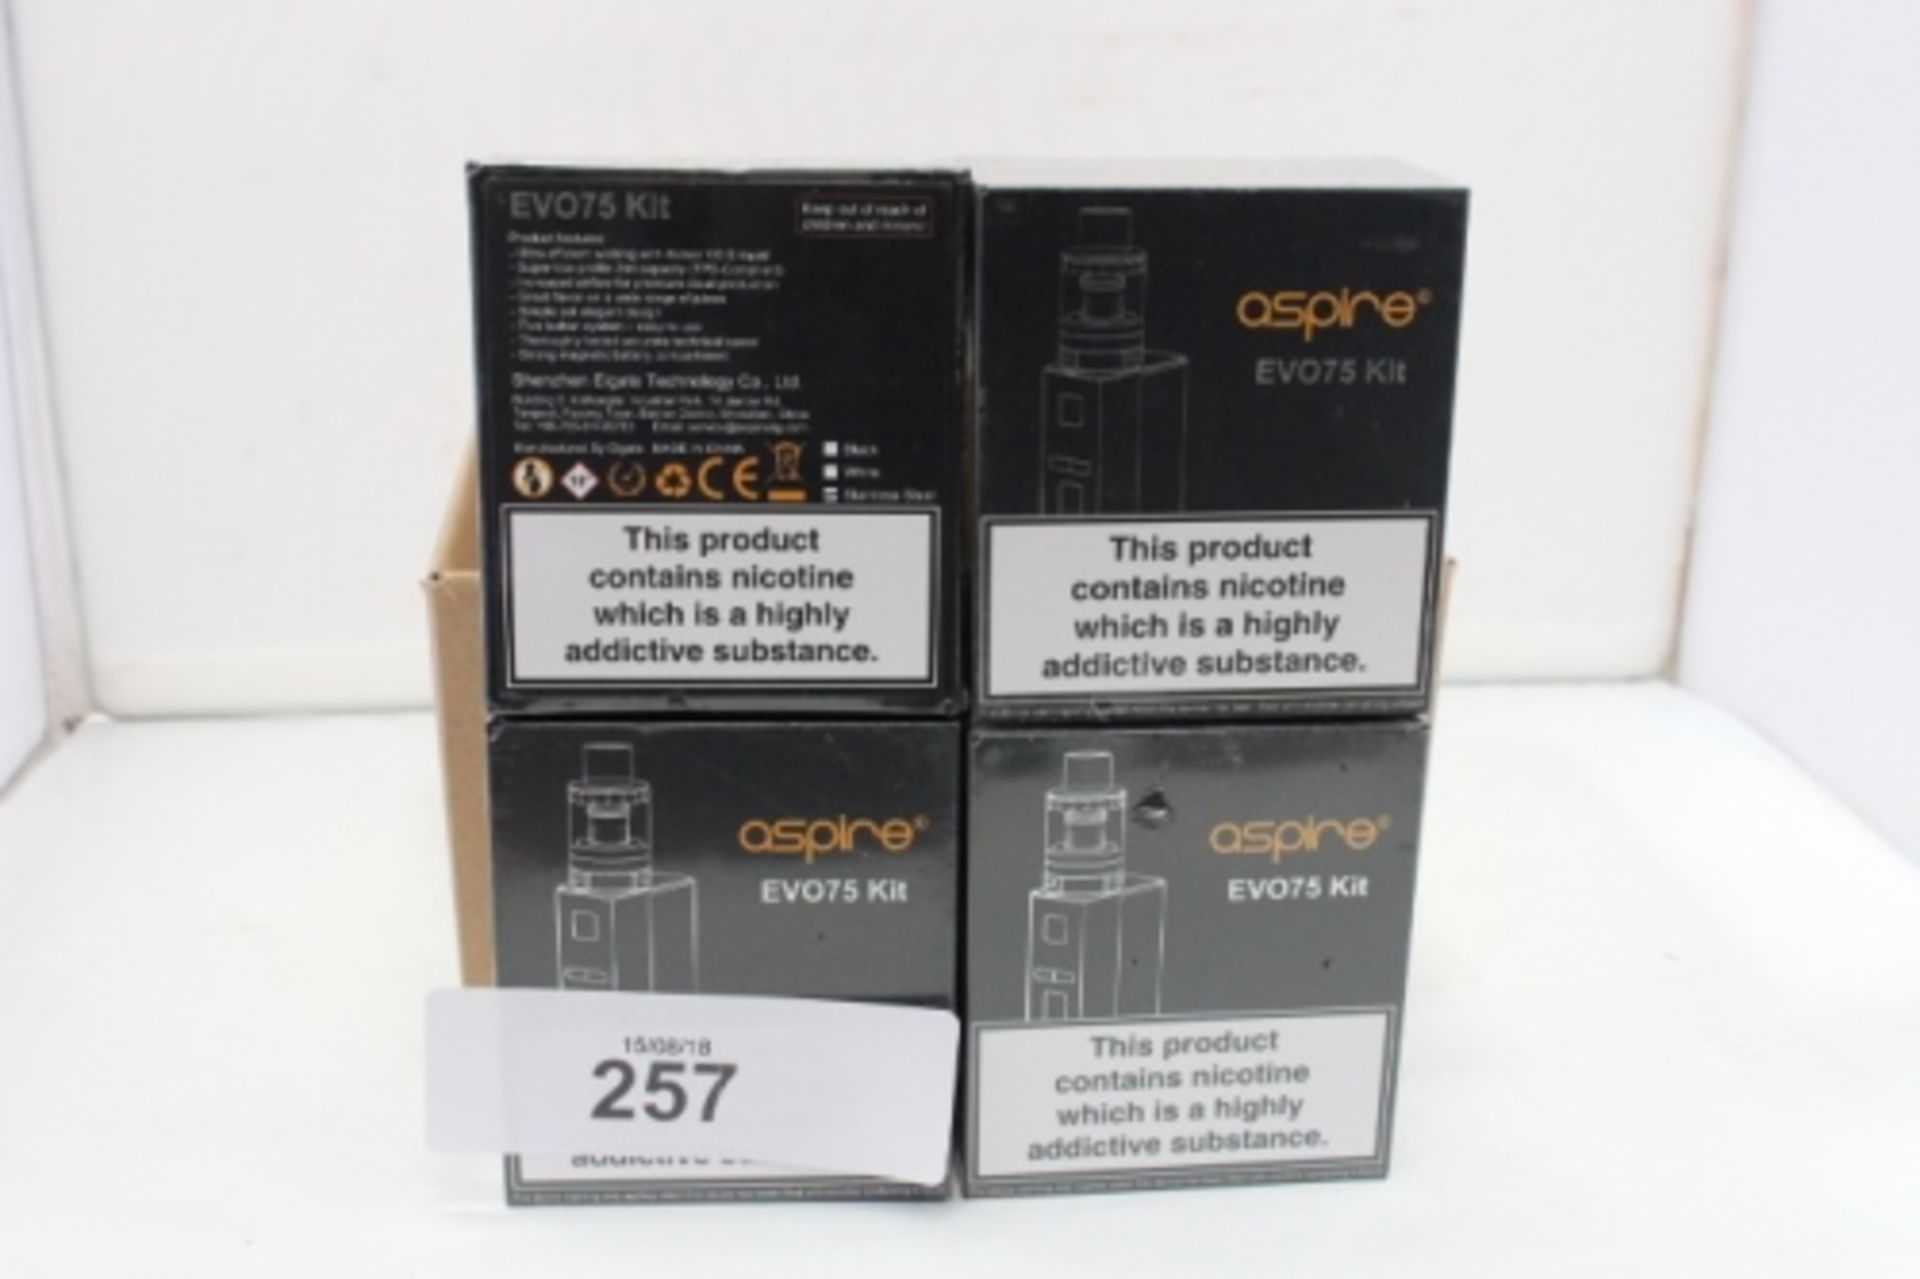 4 x Aspire EVO75 vaping kits, RRP £40 each - Sealed new in box (FC6)